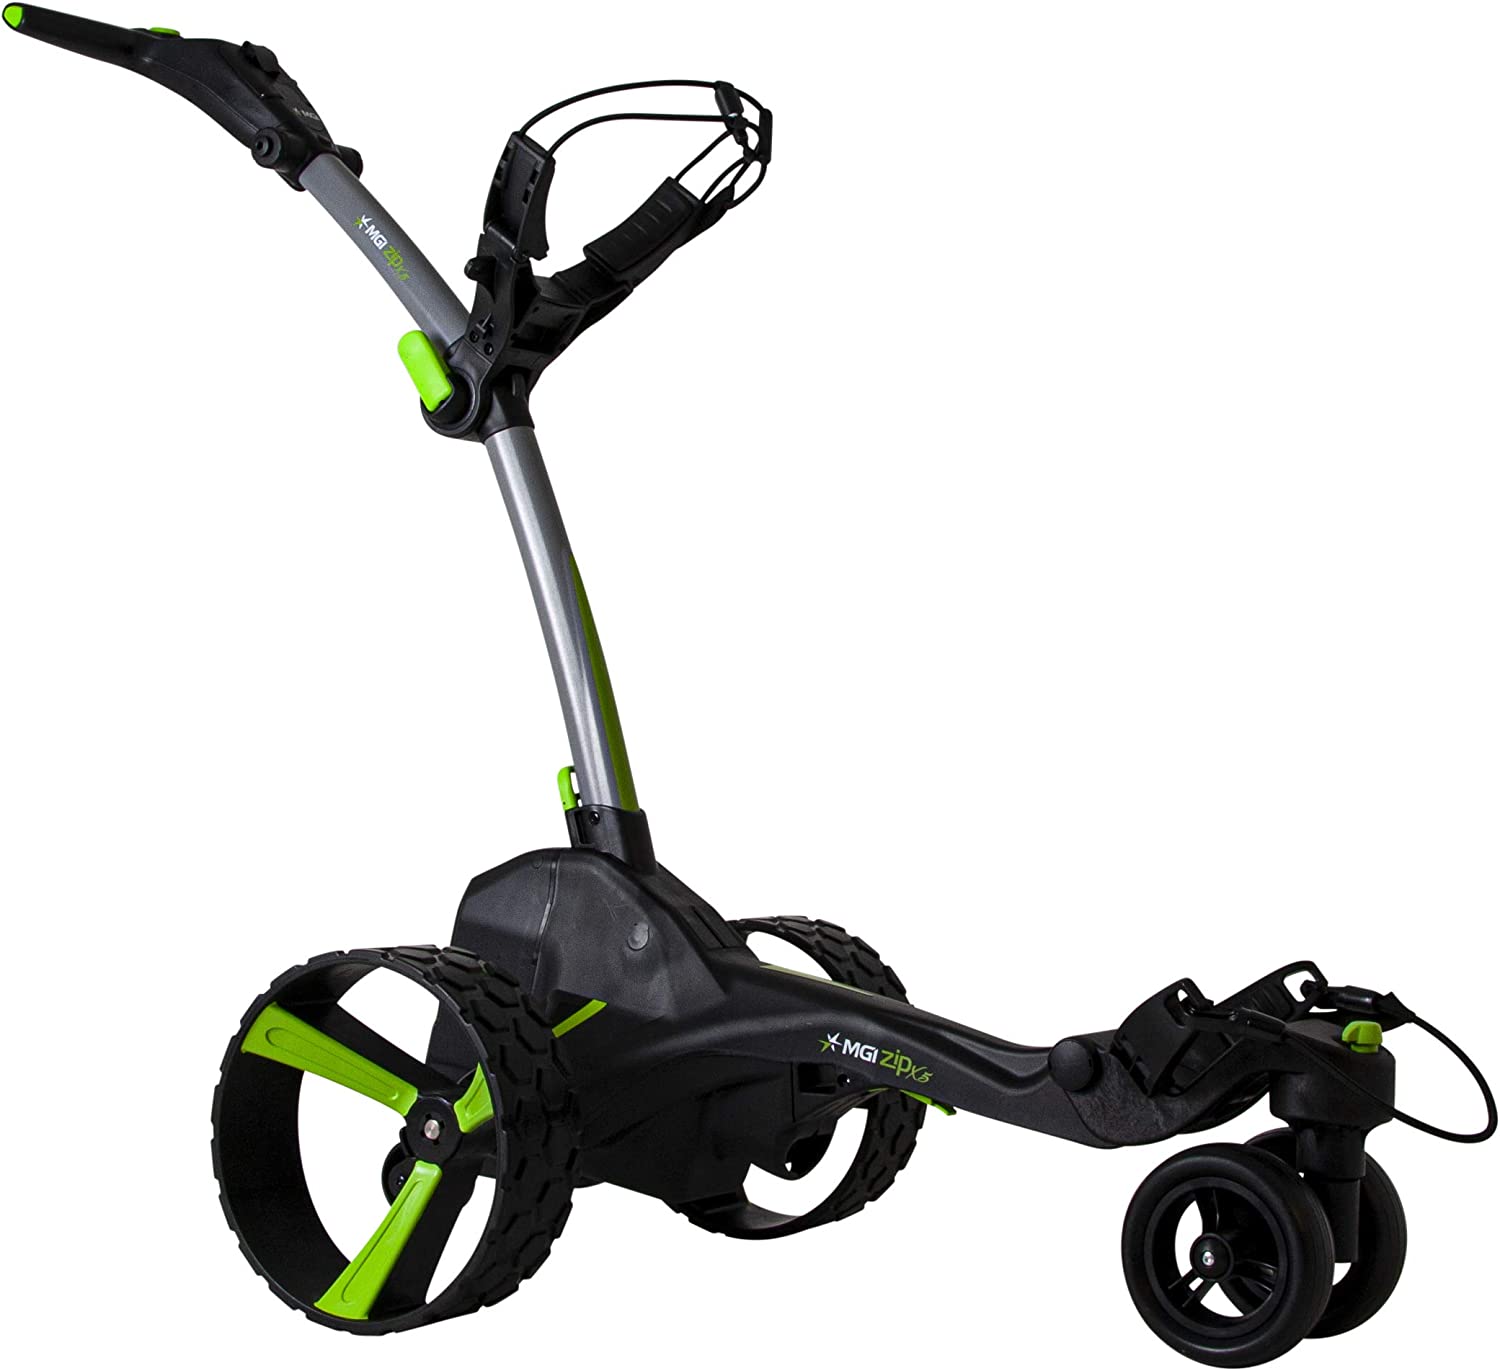 MGI Zip X5 Electric Cart Review